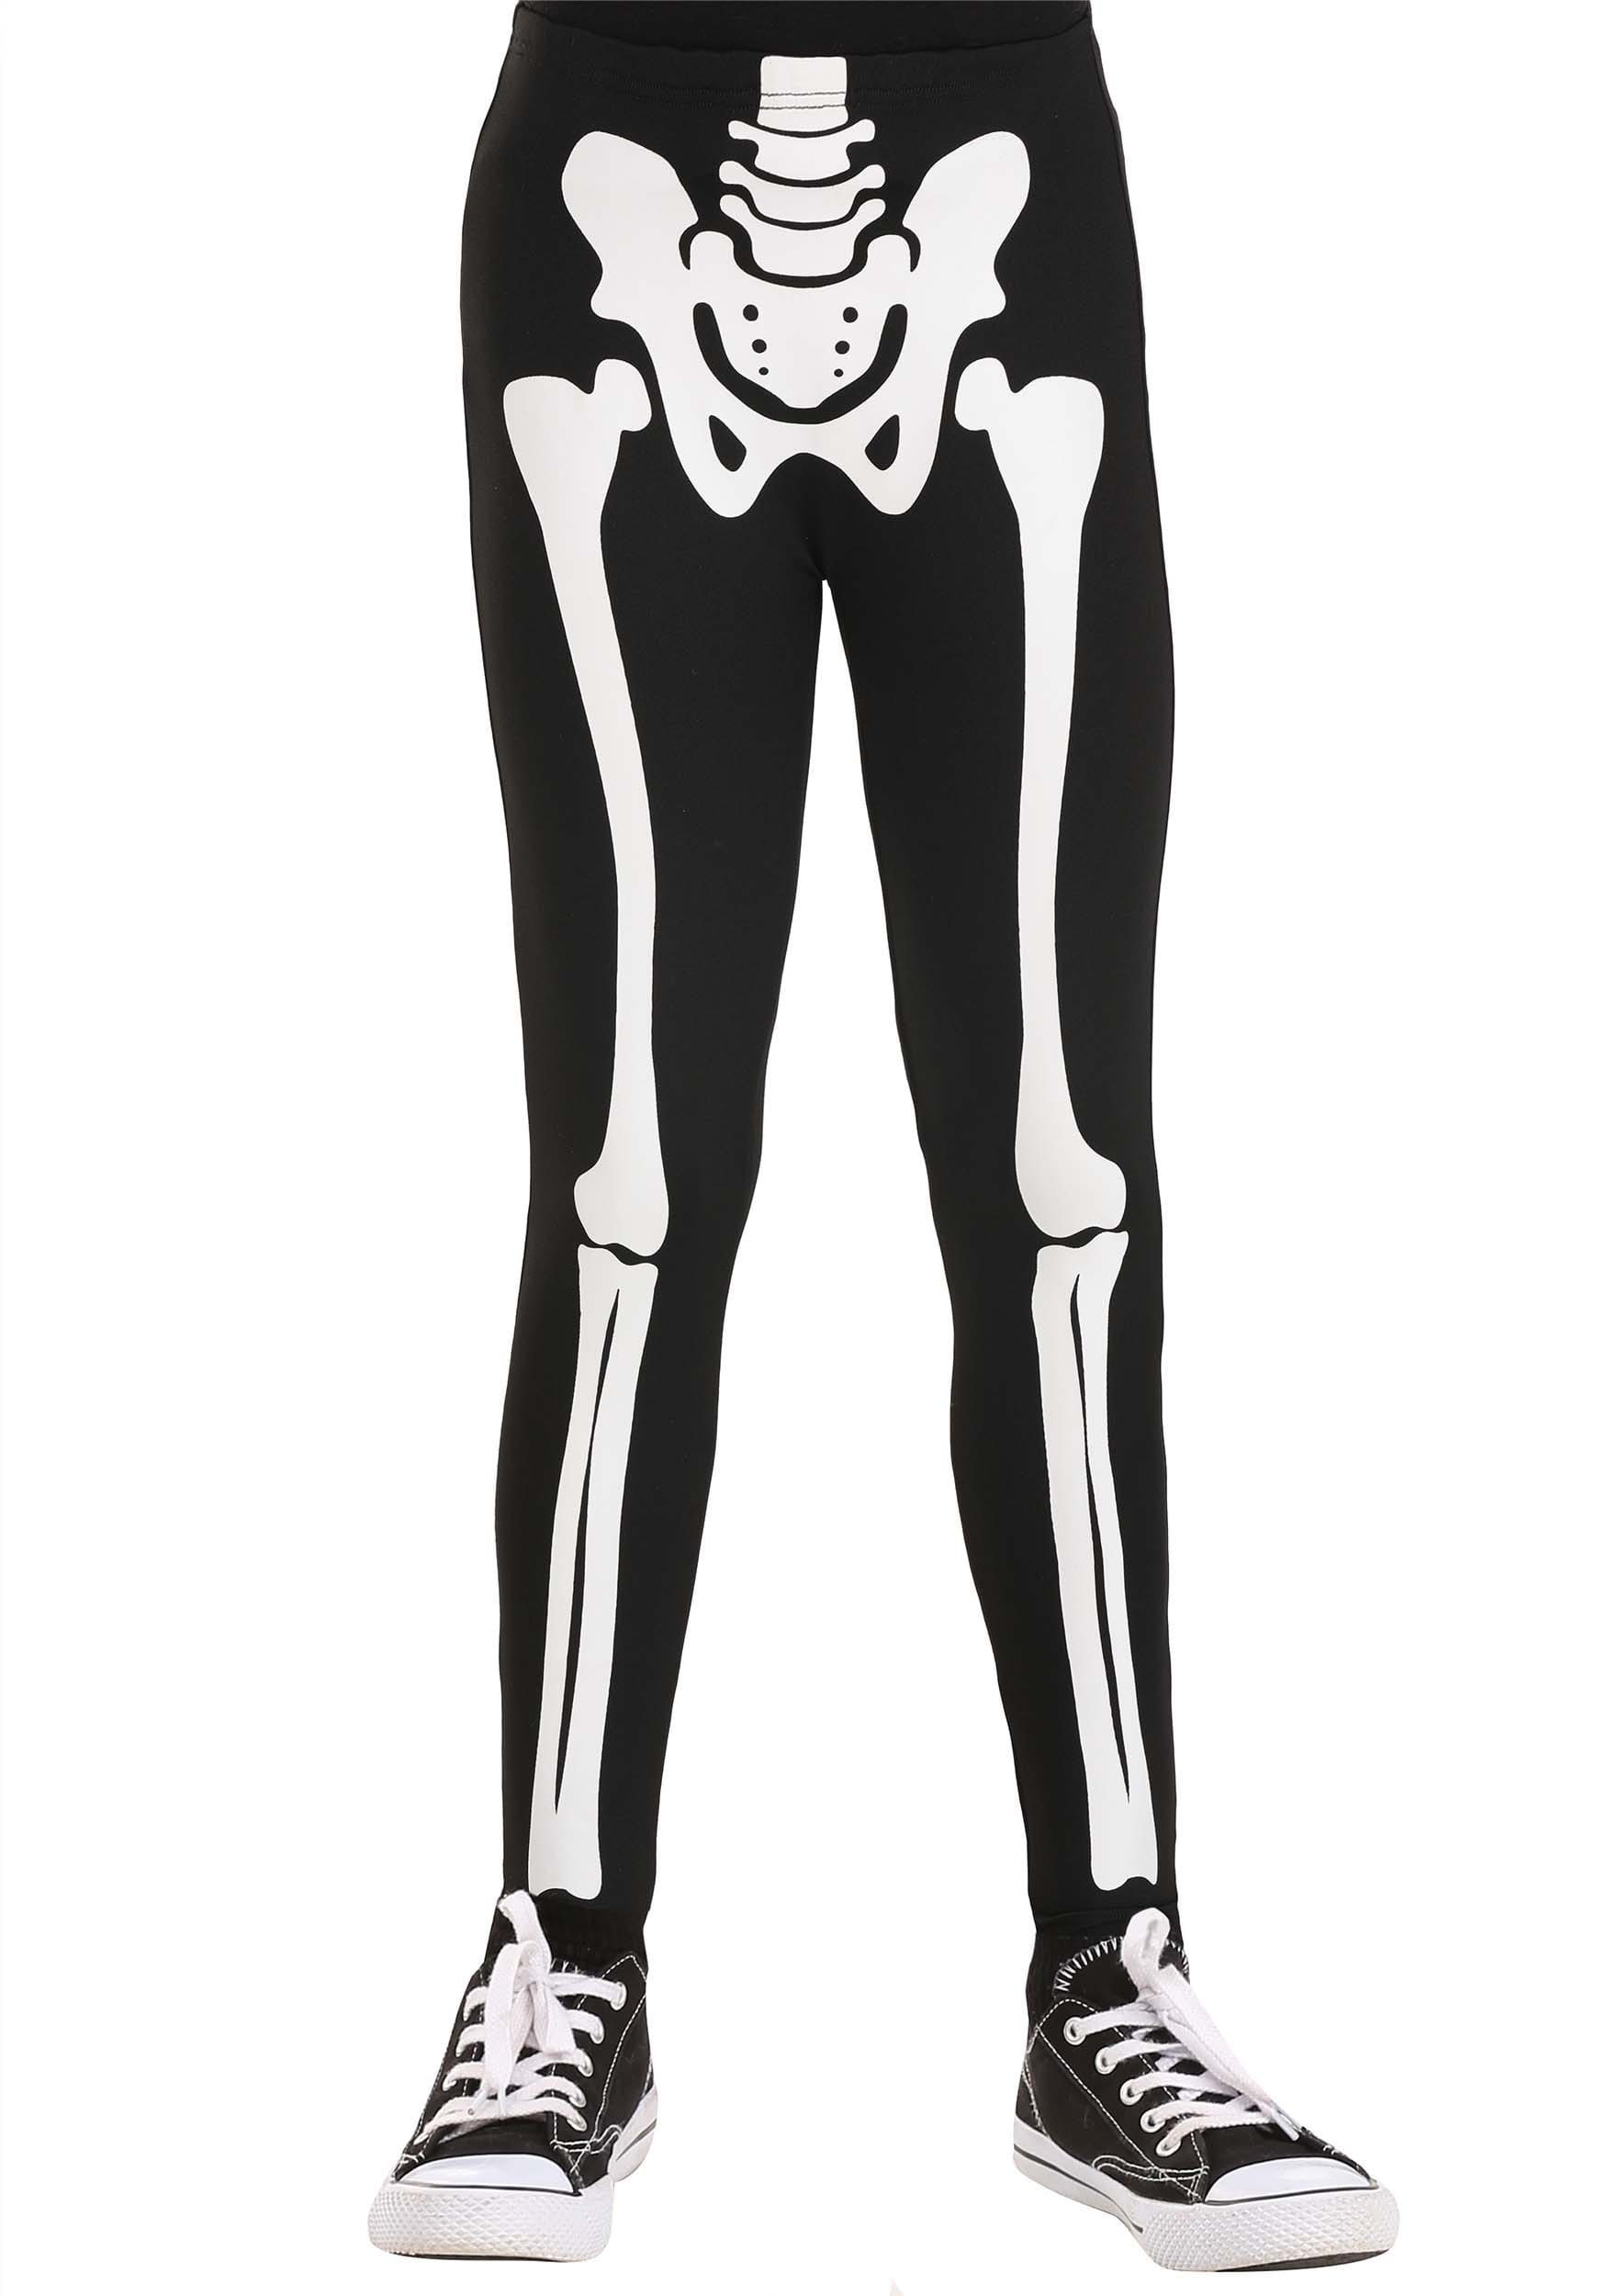 https://images.halloweencostumes.com/products/82448/1-1/kids-classic-skeleton-leggings.jpg